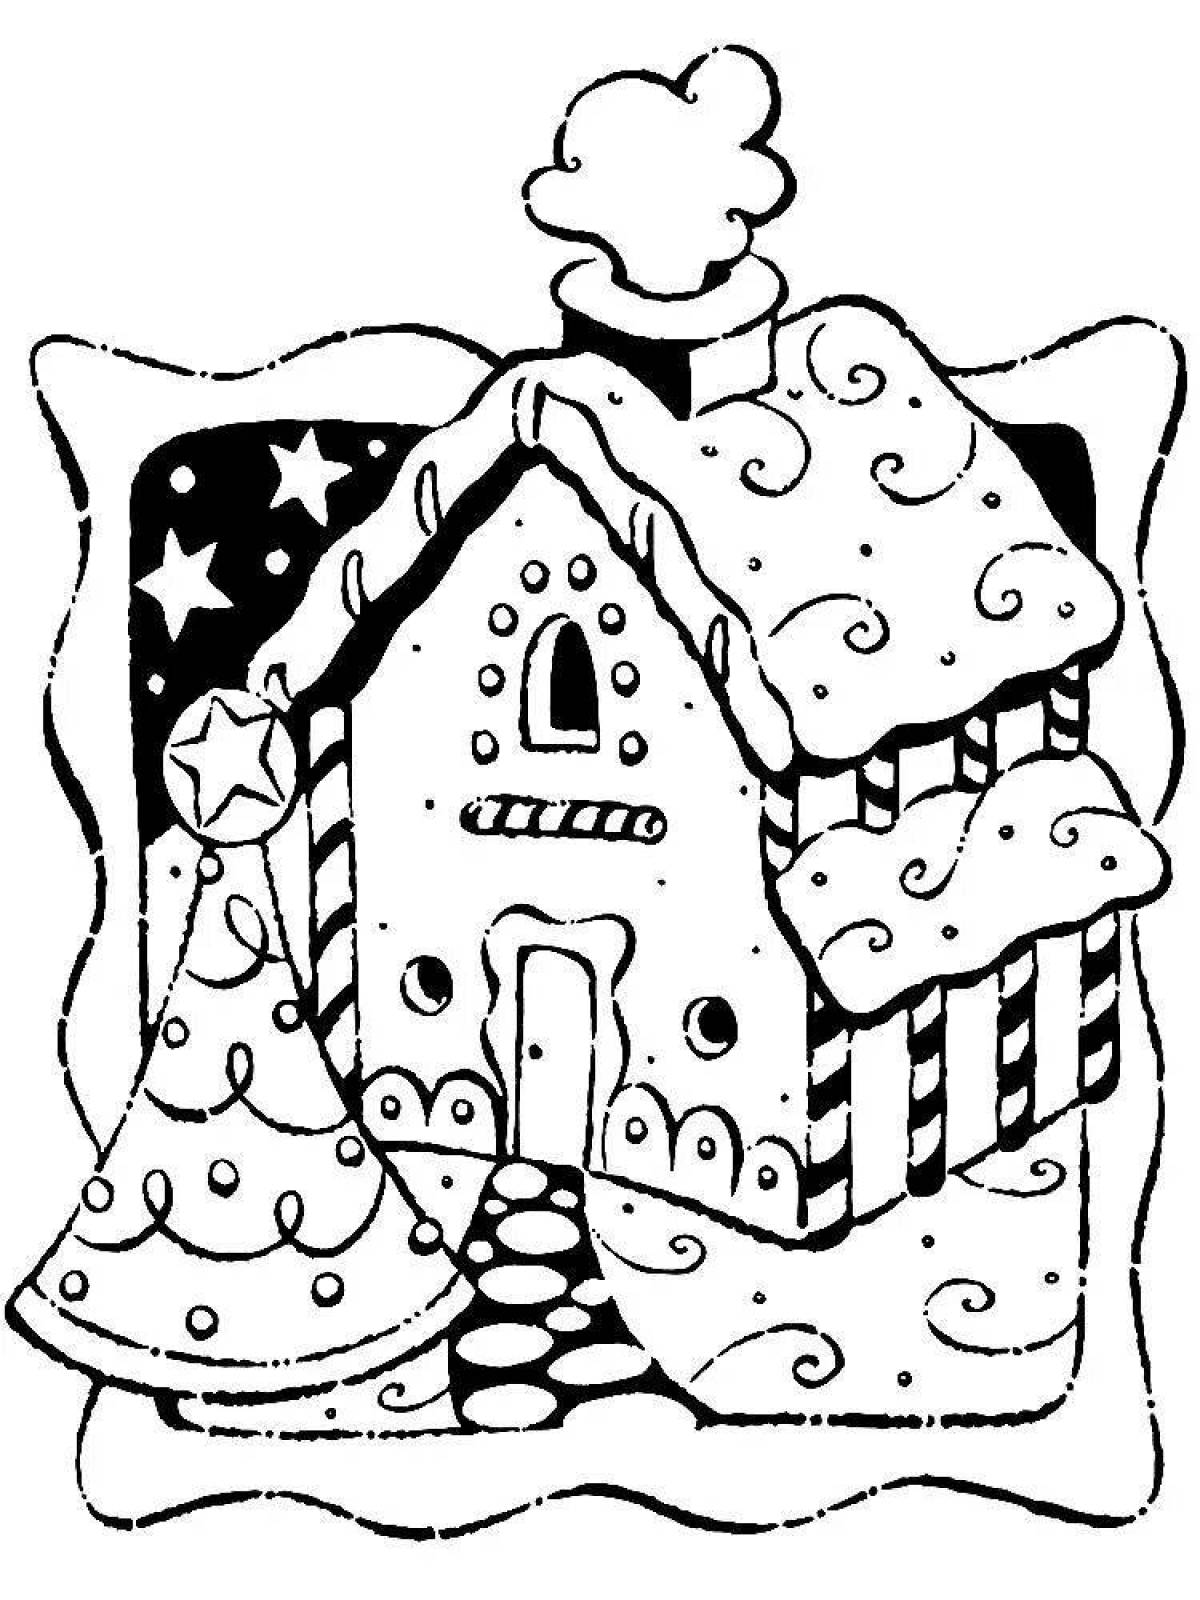 Coloring book elegant gingerbread house for kids